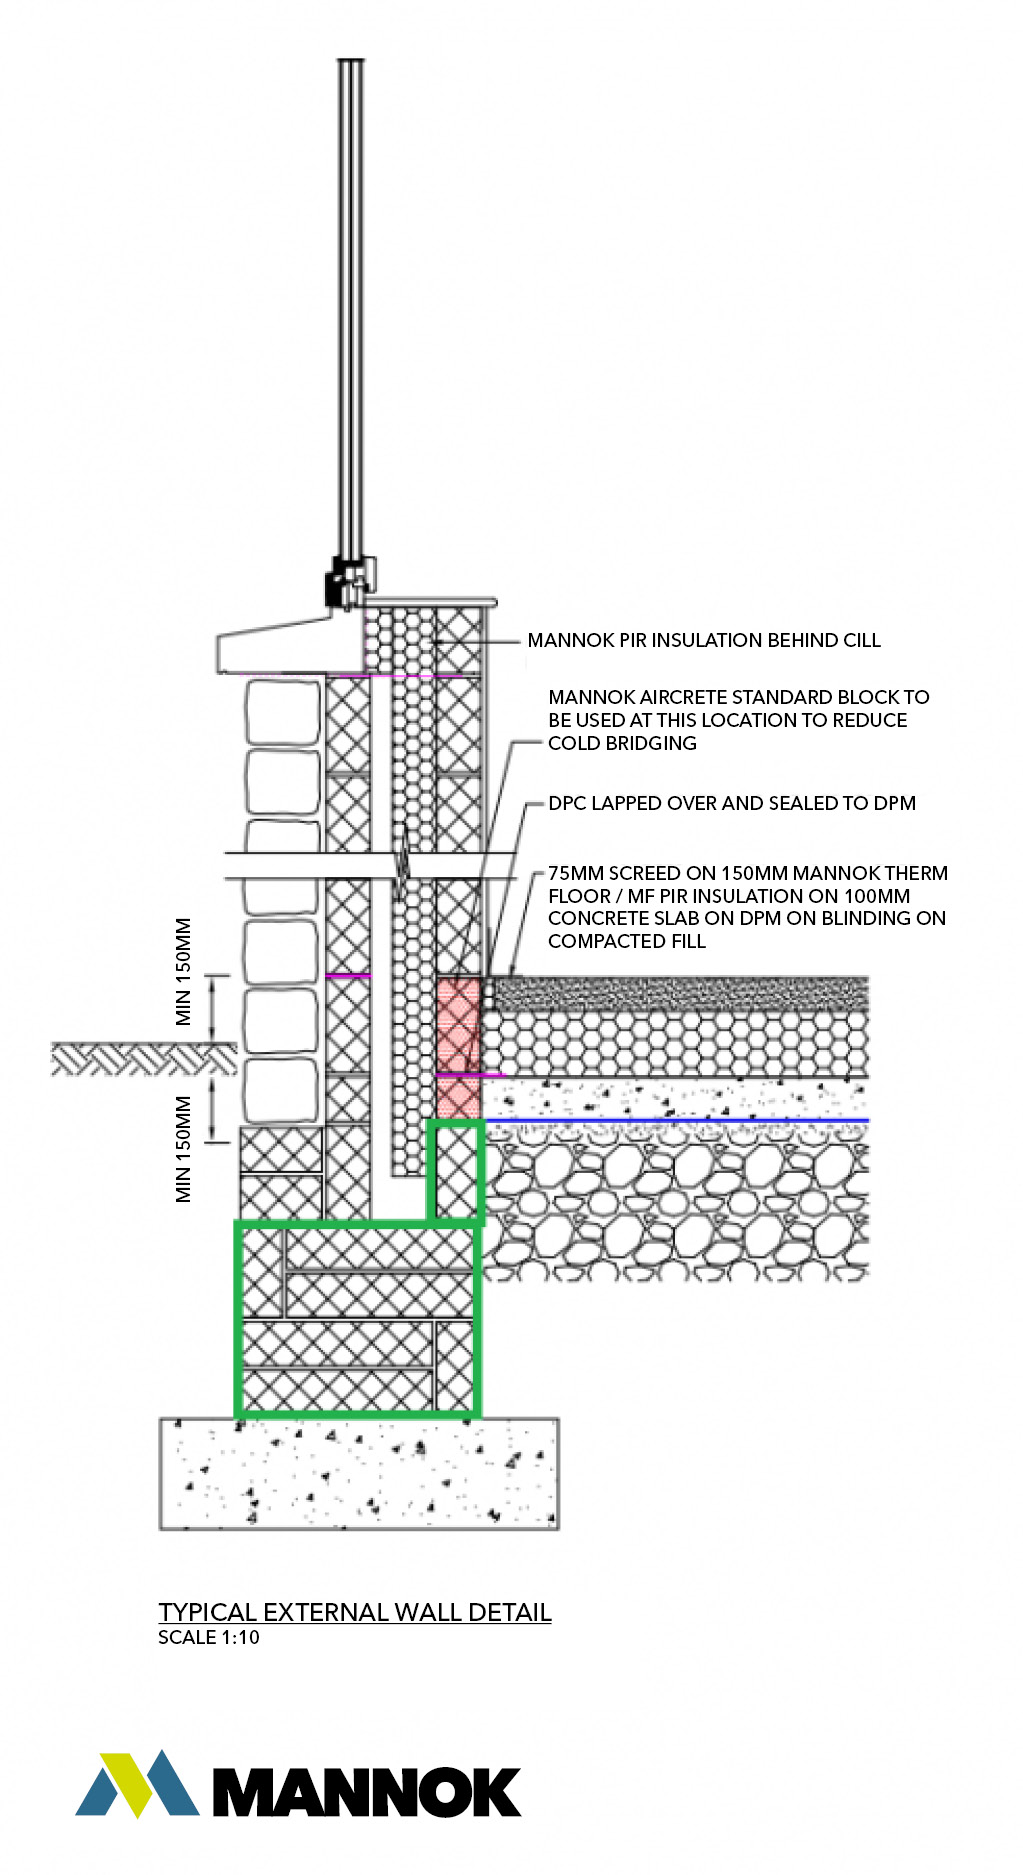 Durability compliance with Mannok Aircrete Blocks